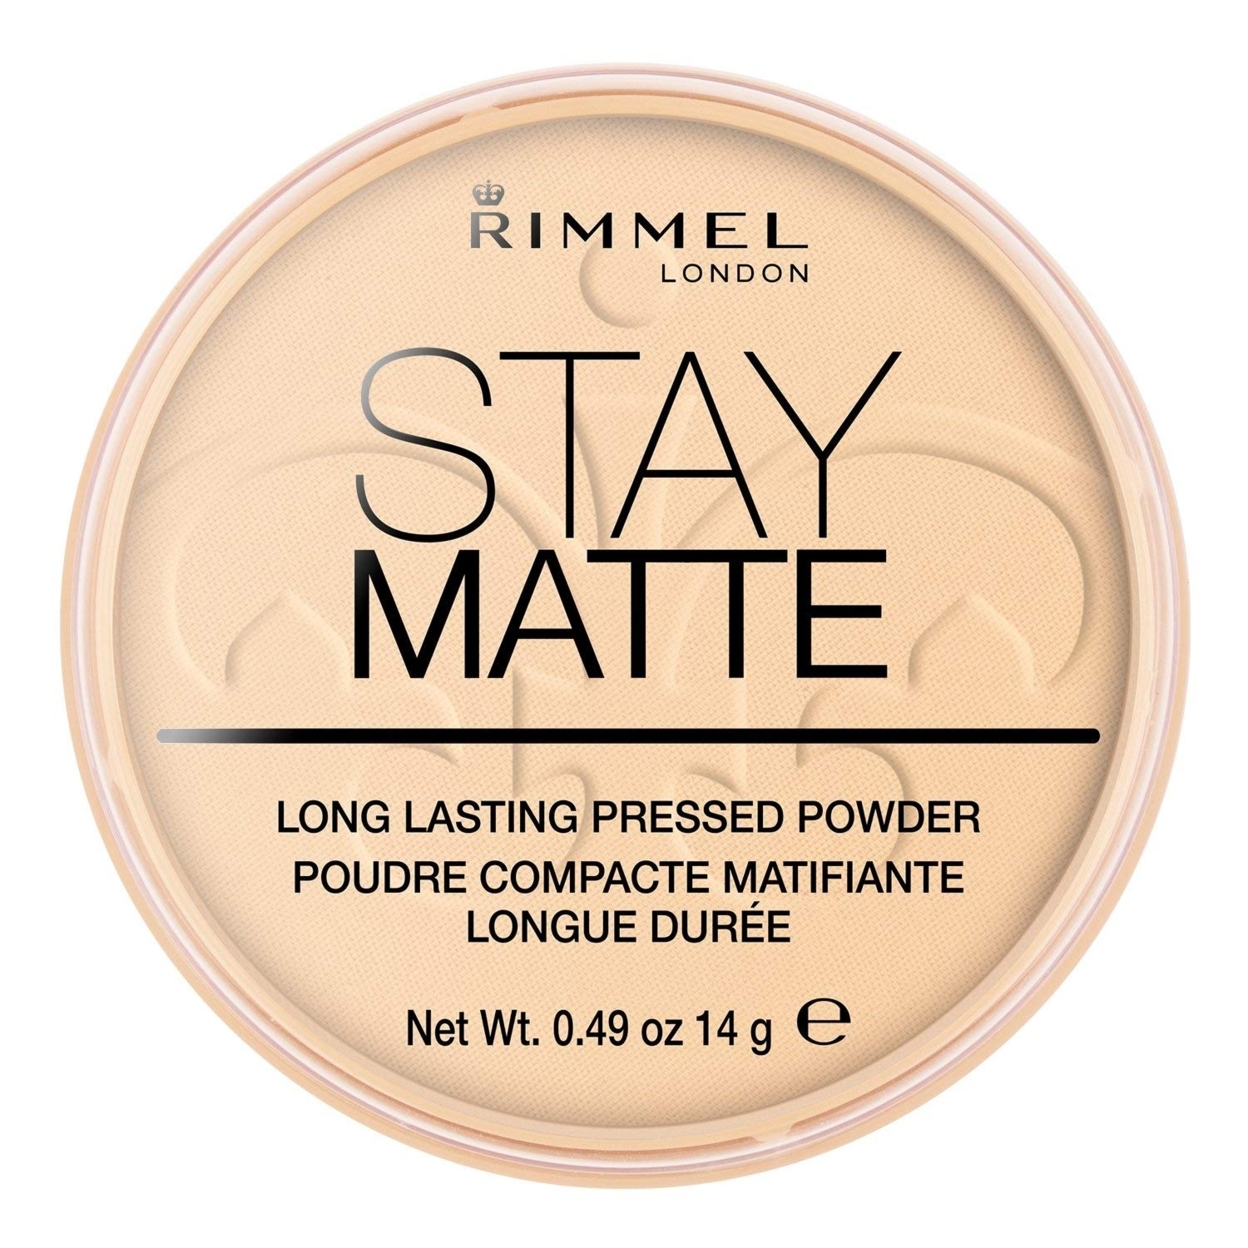 Rimmel London Stay Matte Pressed Powder, Transparent, 0.49 oz - image 1 of 4